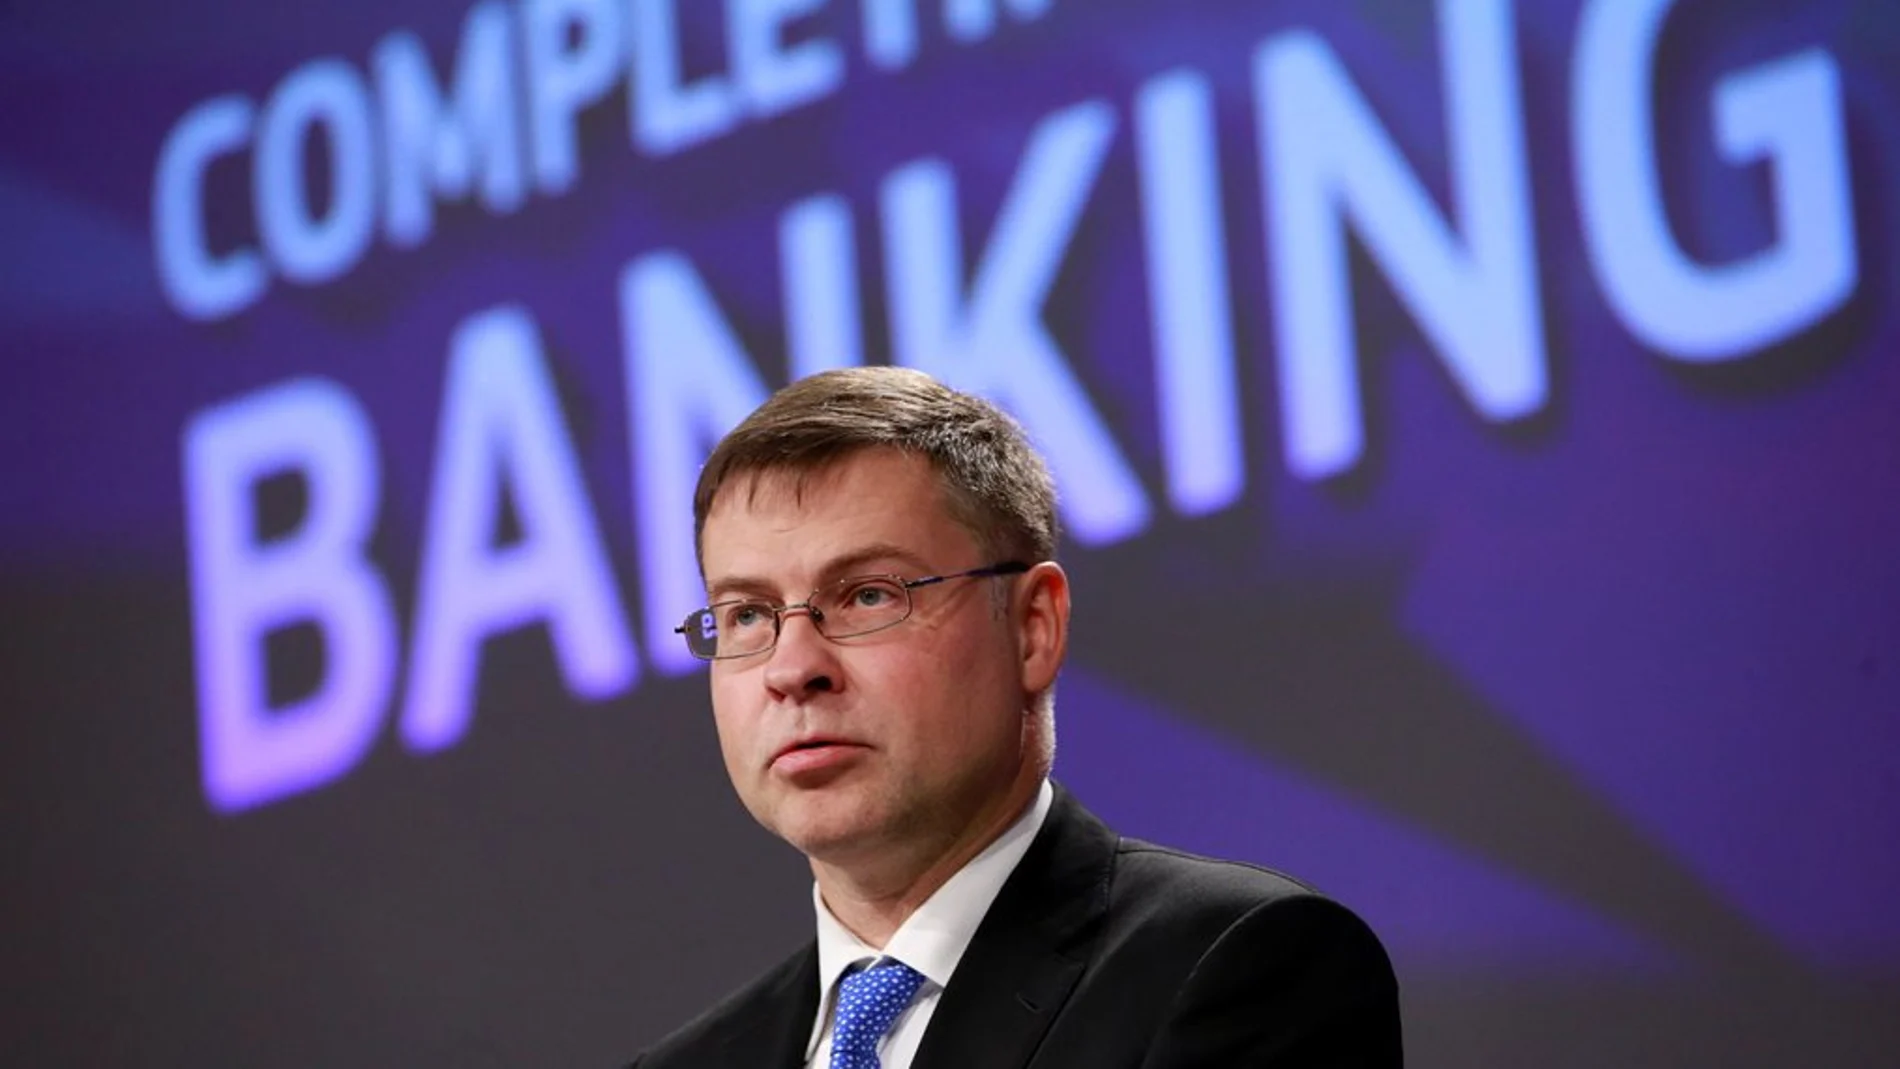 Valdis Dombrovskis, vicepresidente de la Comisión Europea